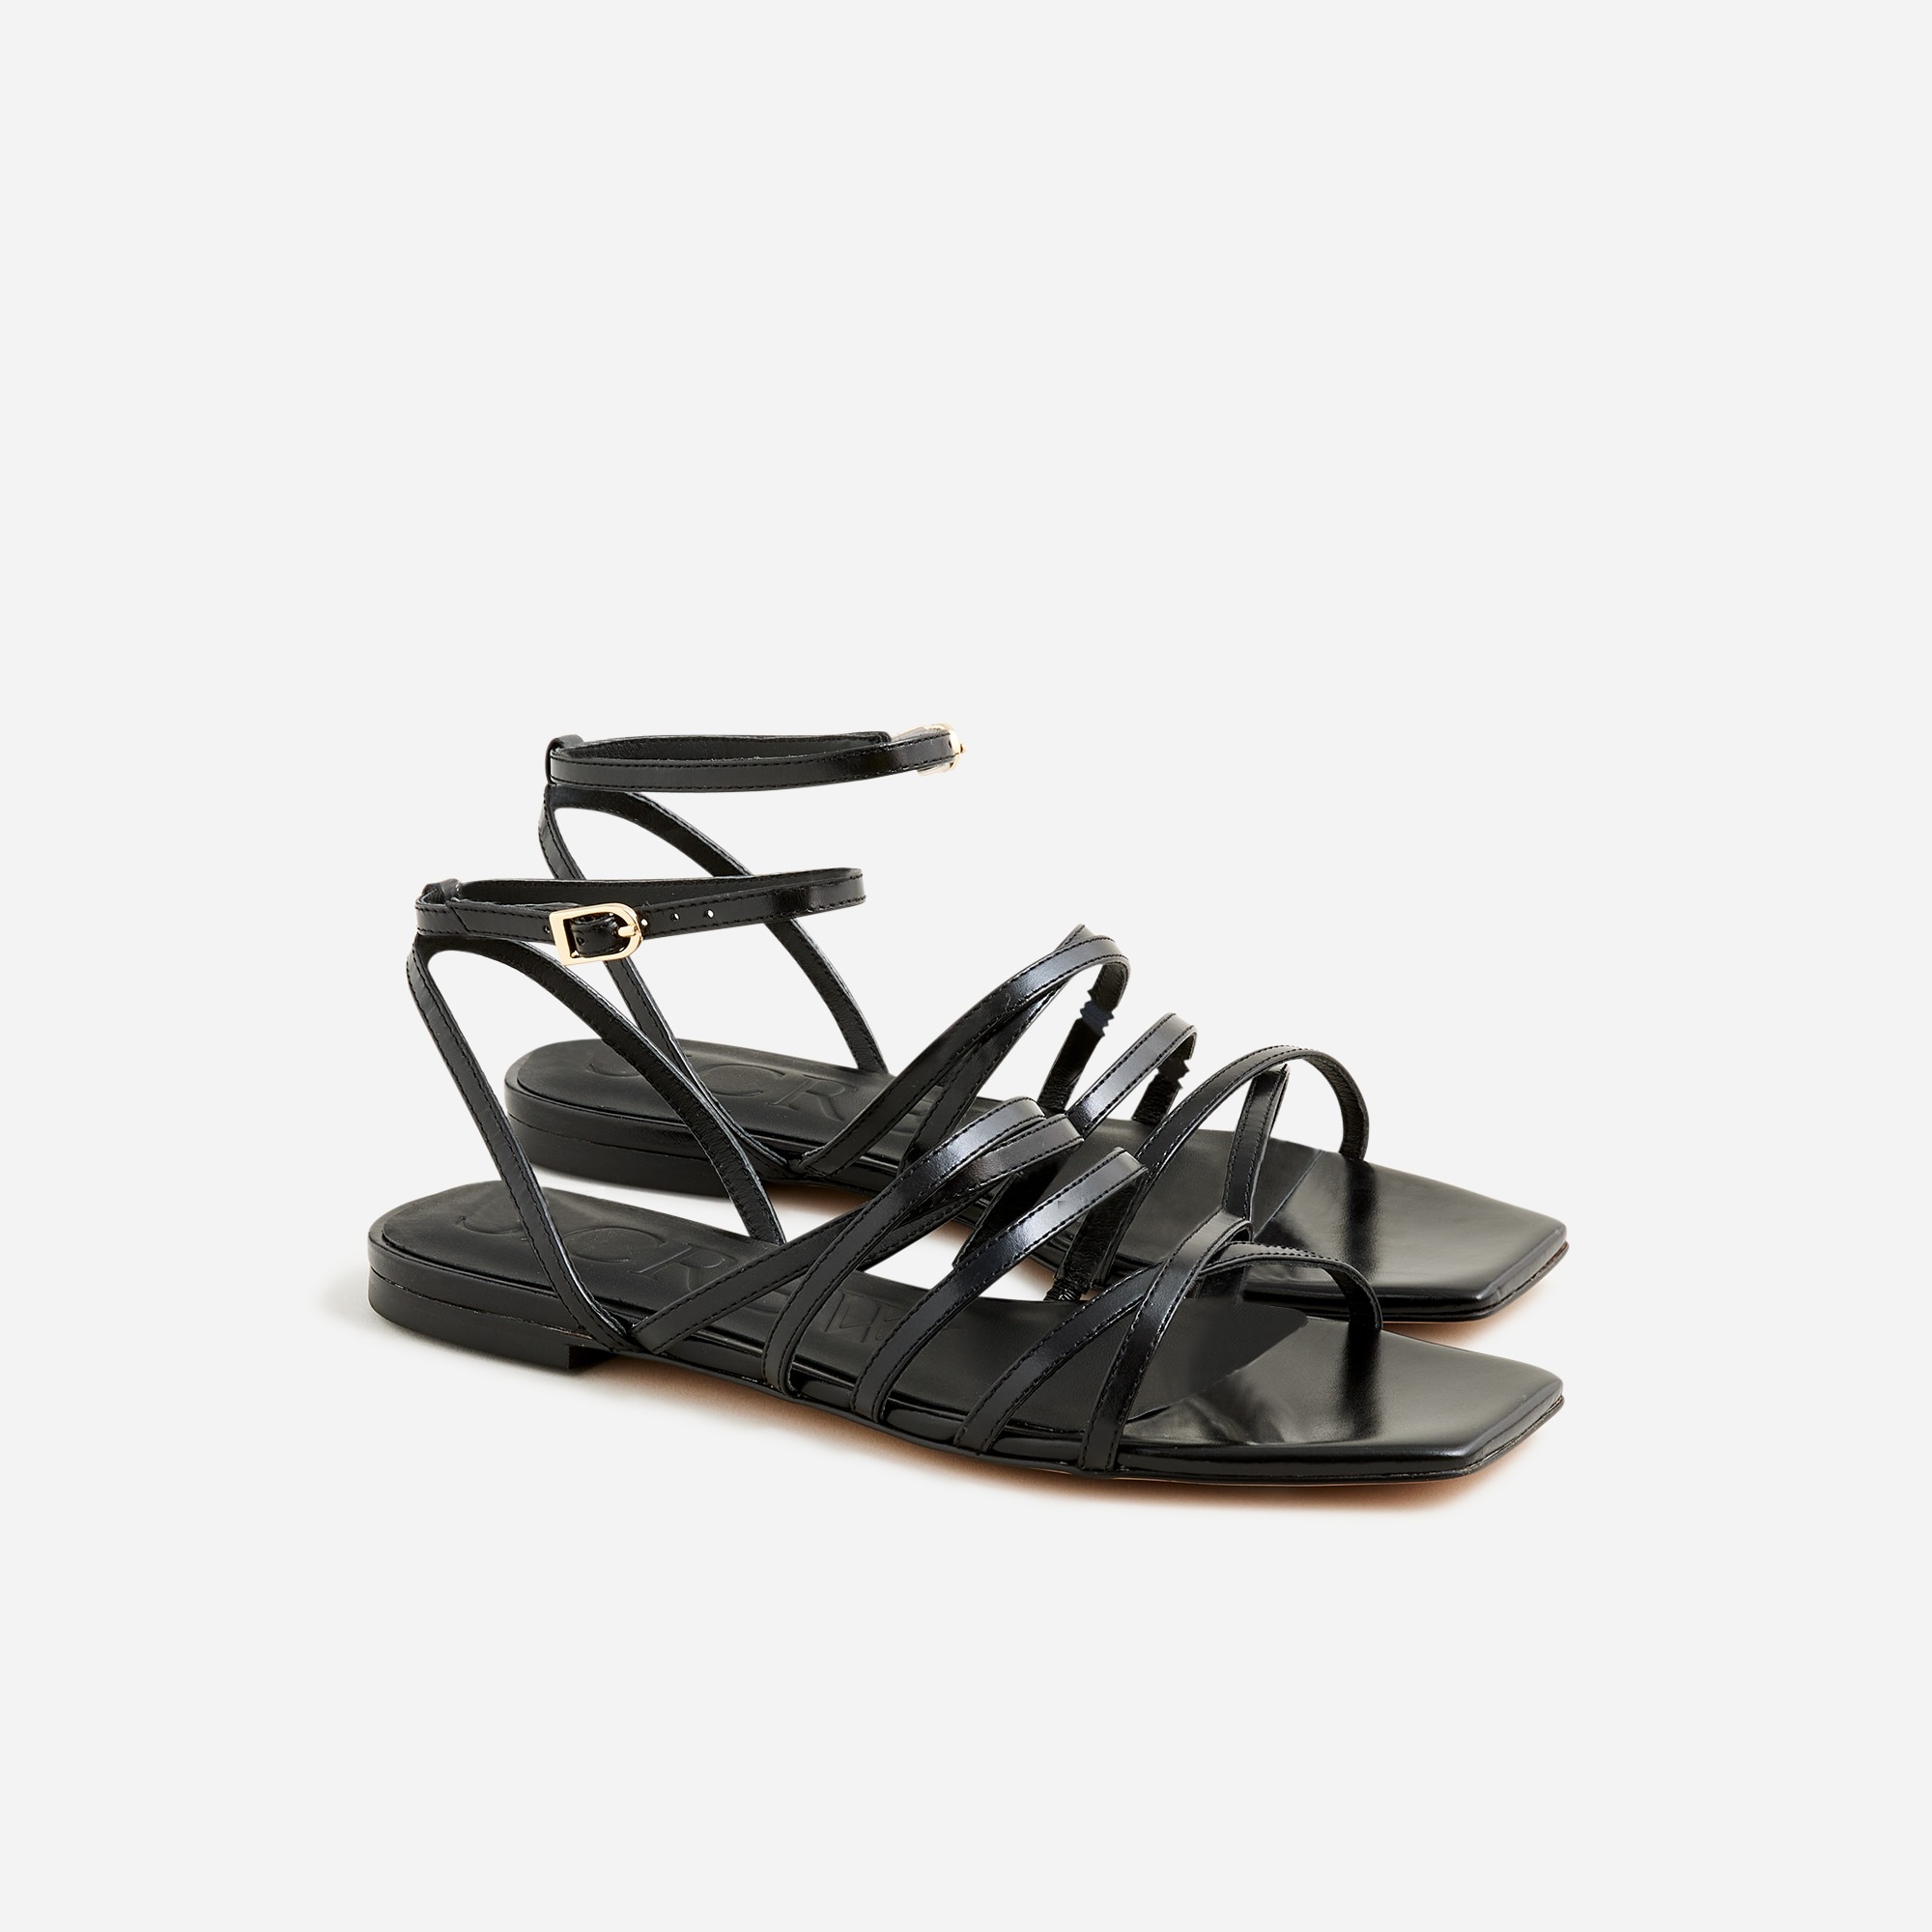  New Capri strappy sandals in leather